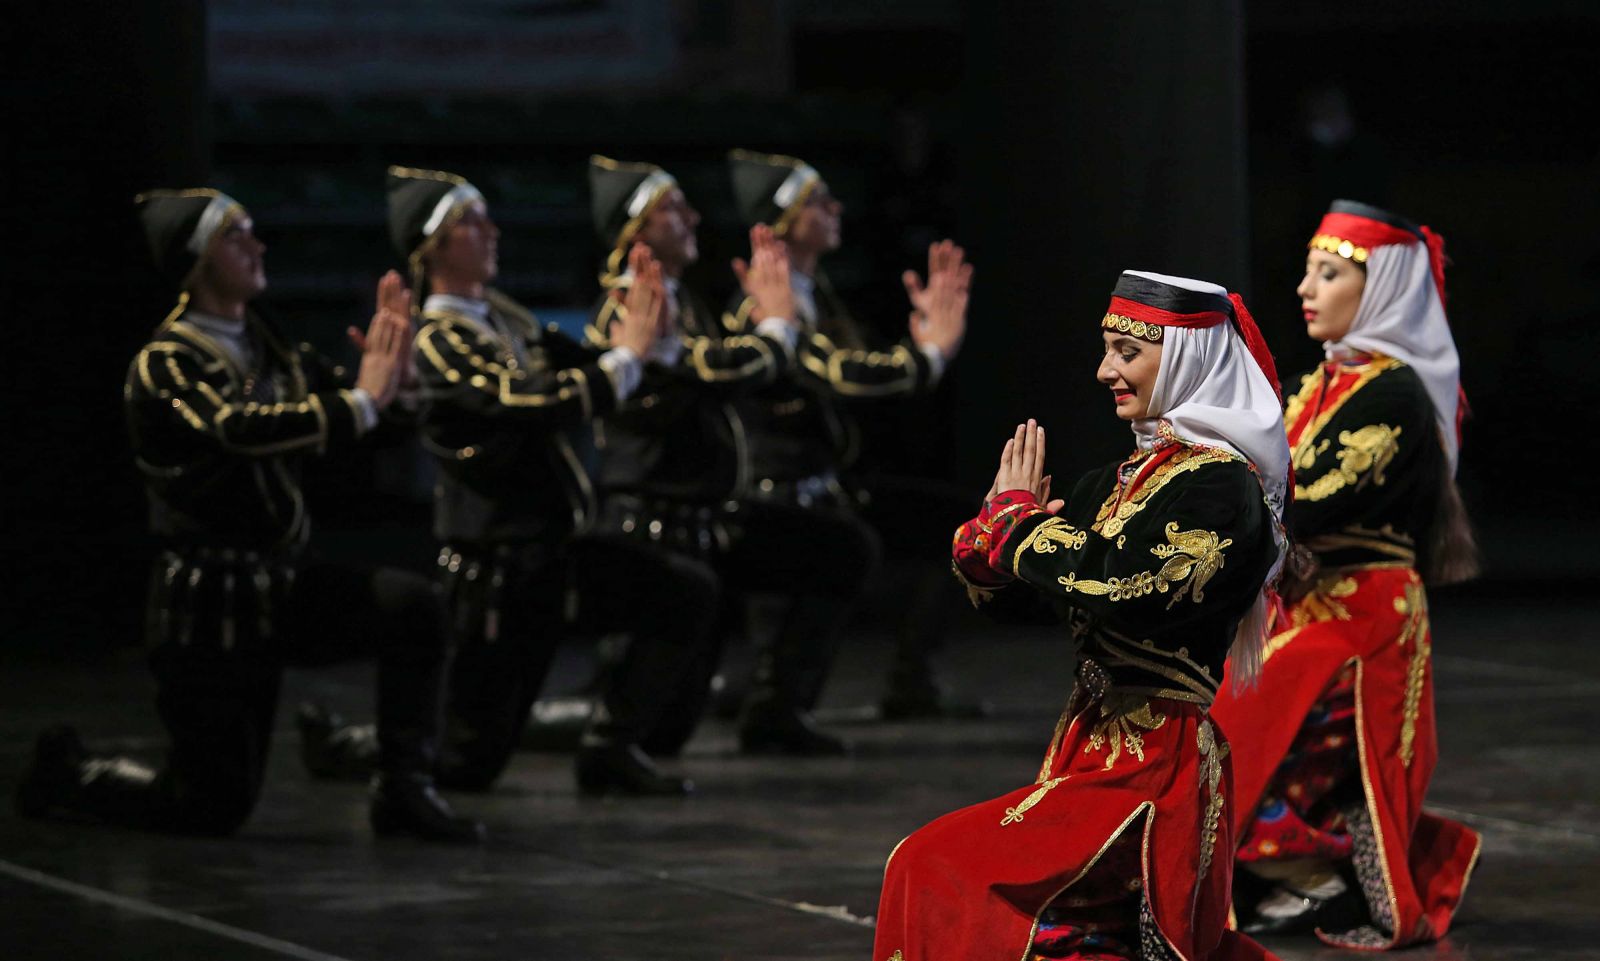 Турецкий танец зейбек. Танец Зейбек. Турецкие танцы. Национальный танец турков. Турецкий танец мужчин Зейбек.